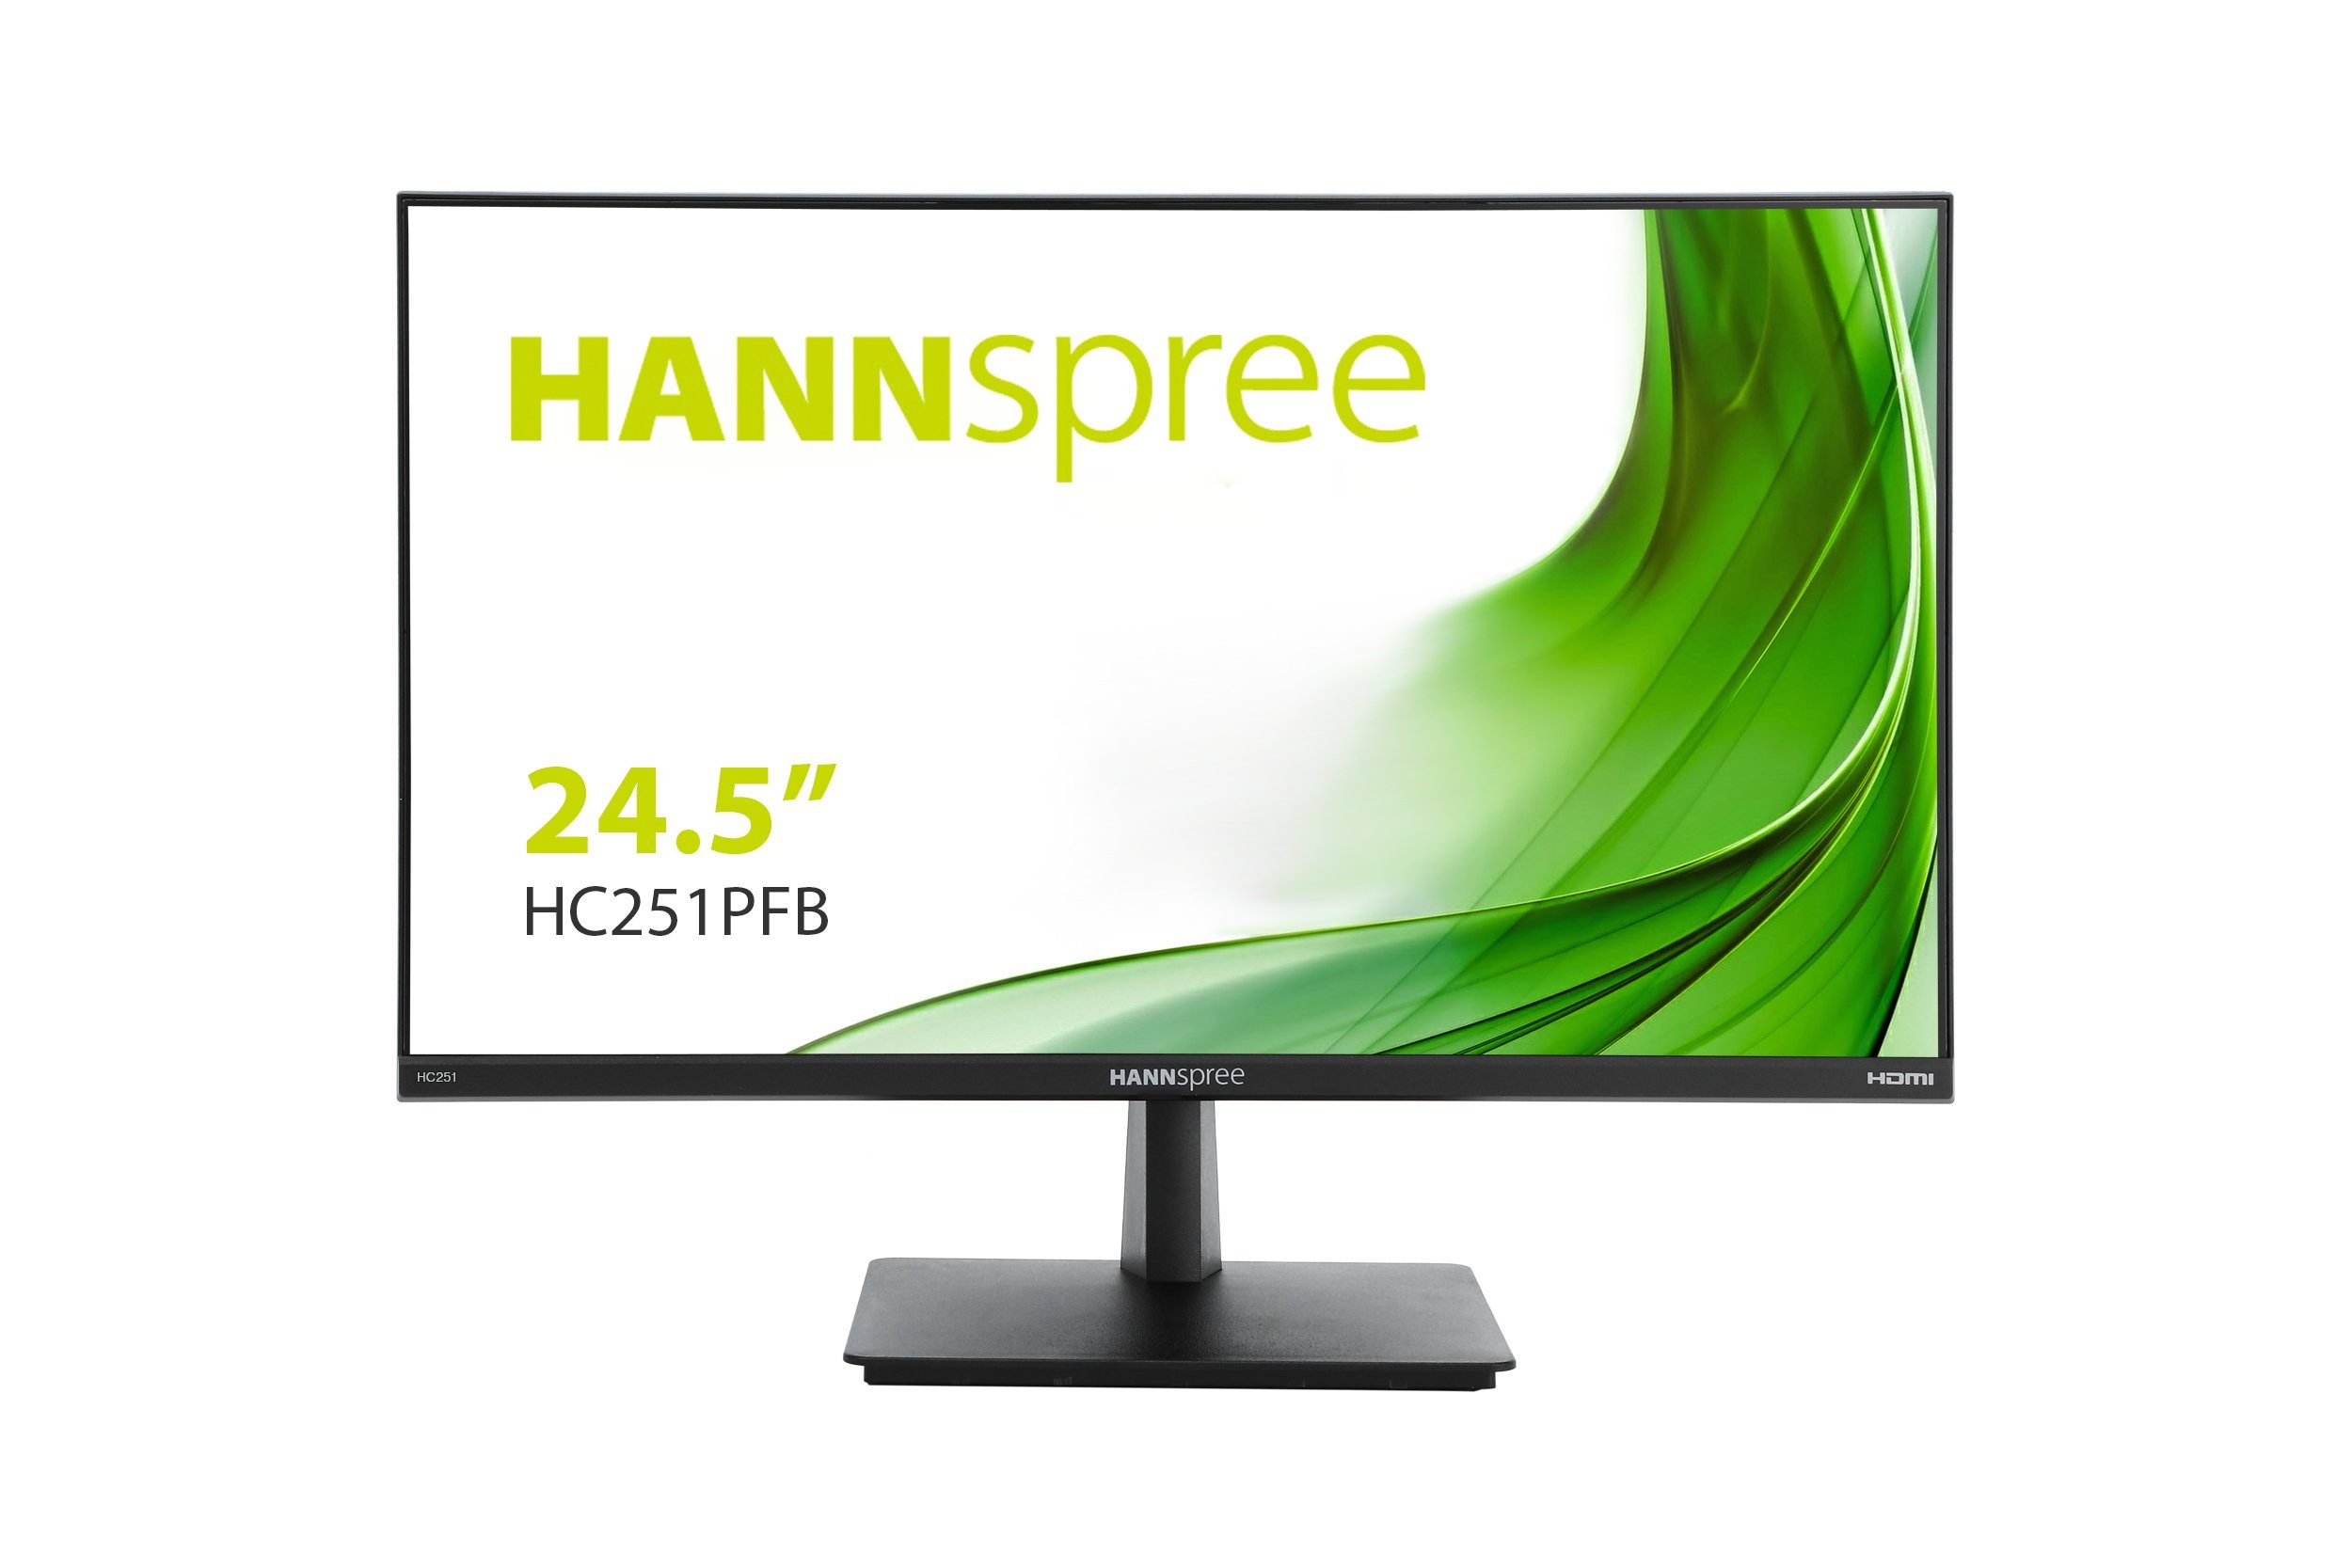 Hannspree HC 251 PFB LED-Monitor